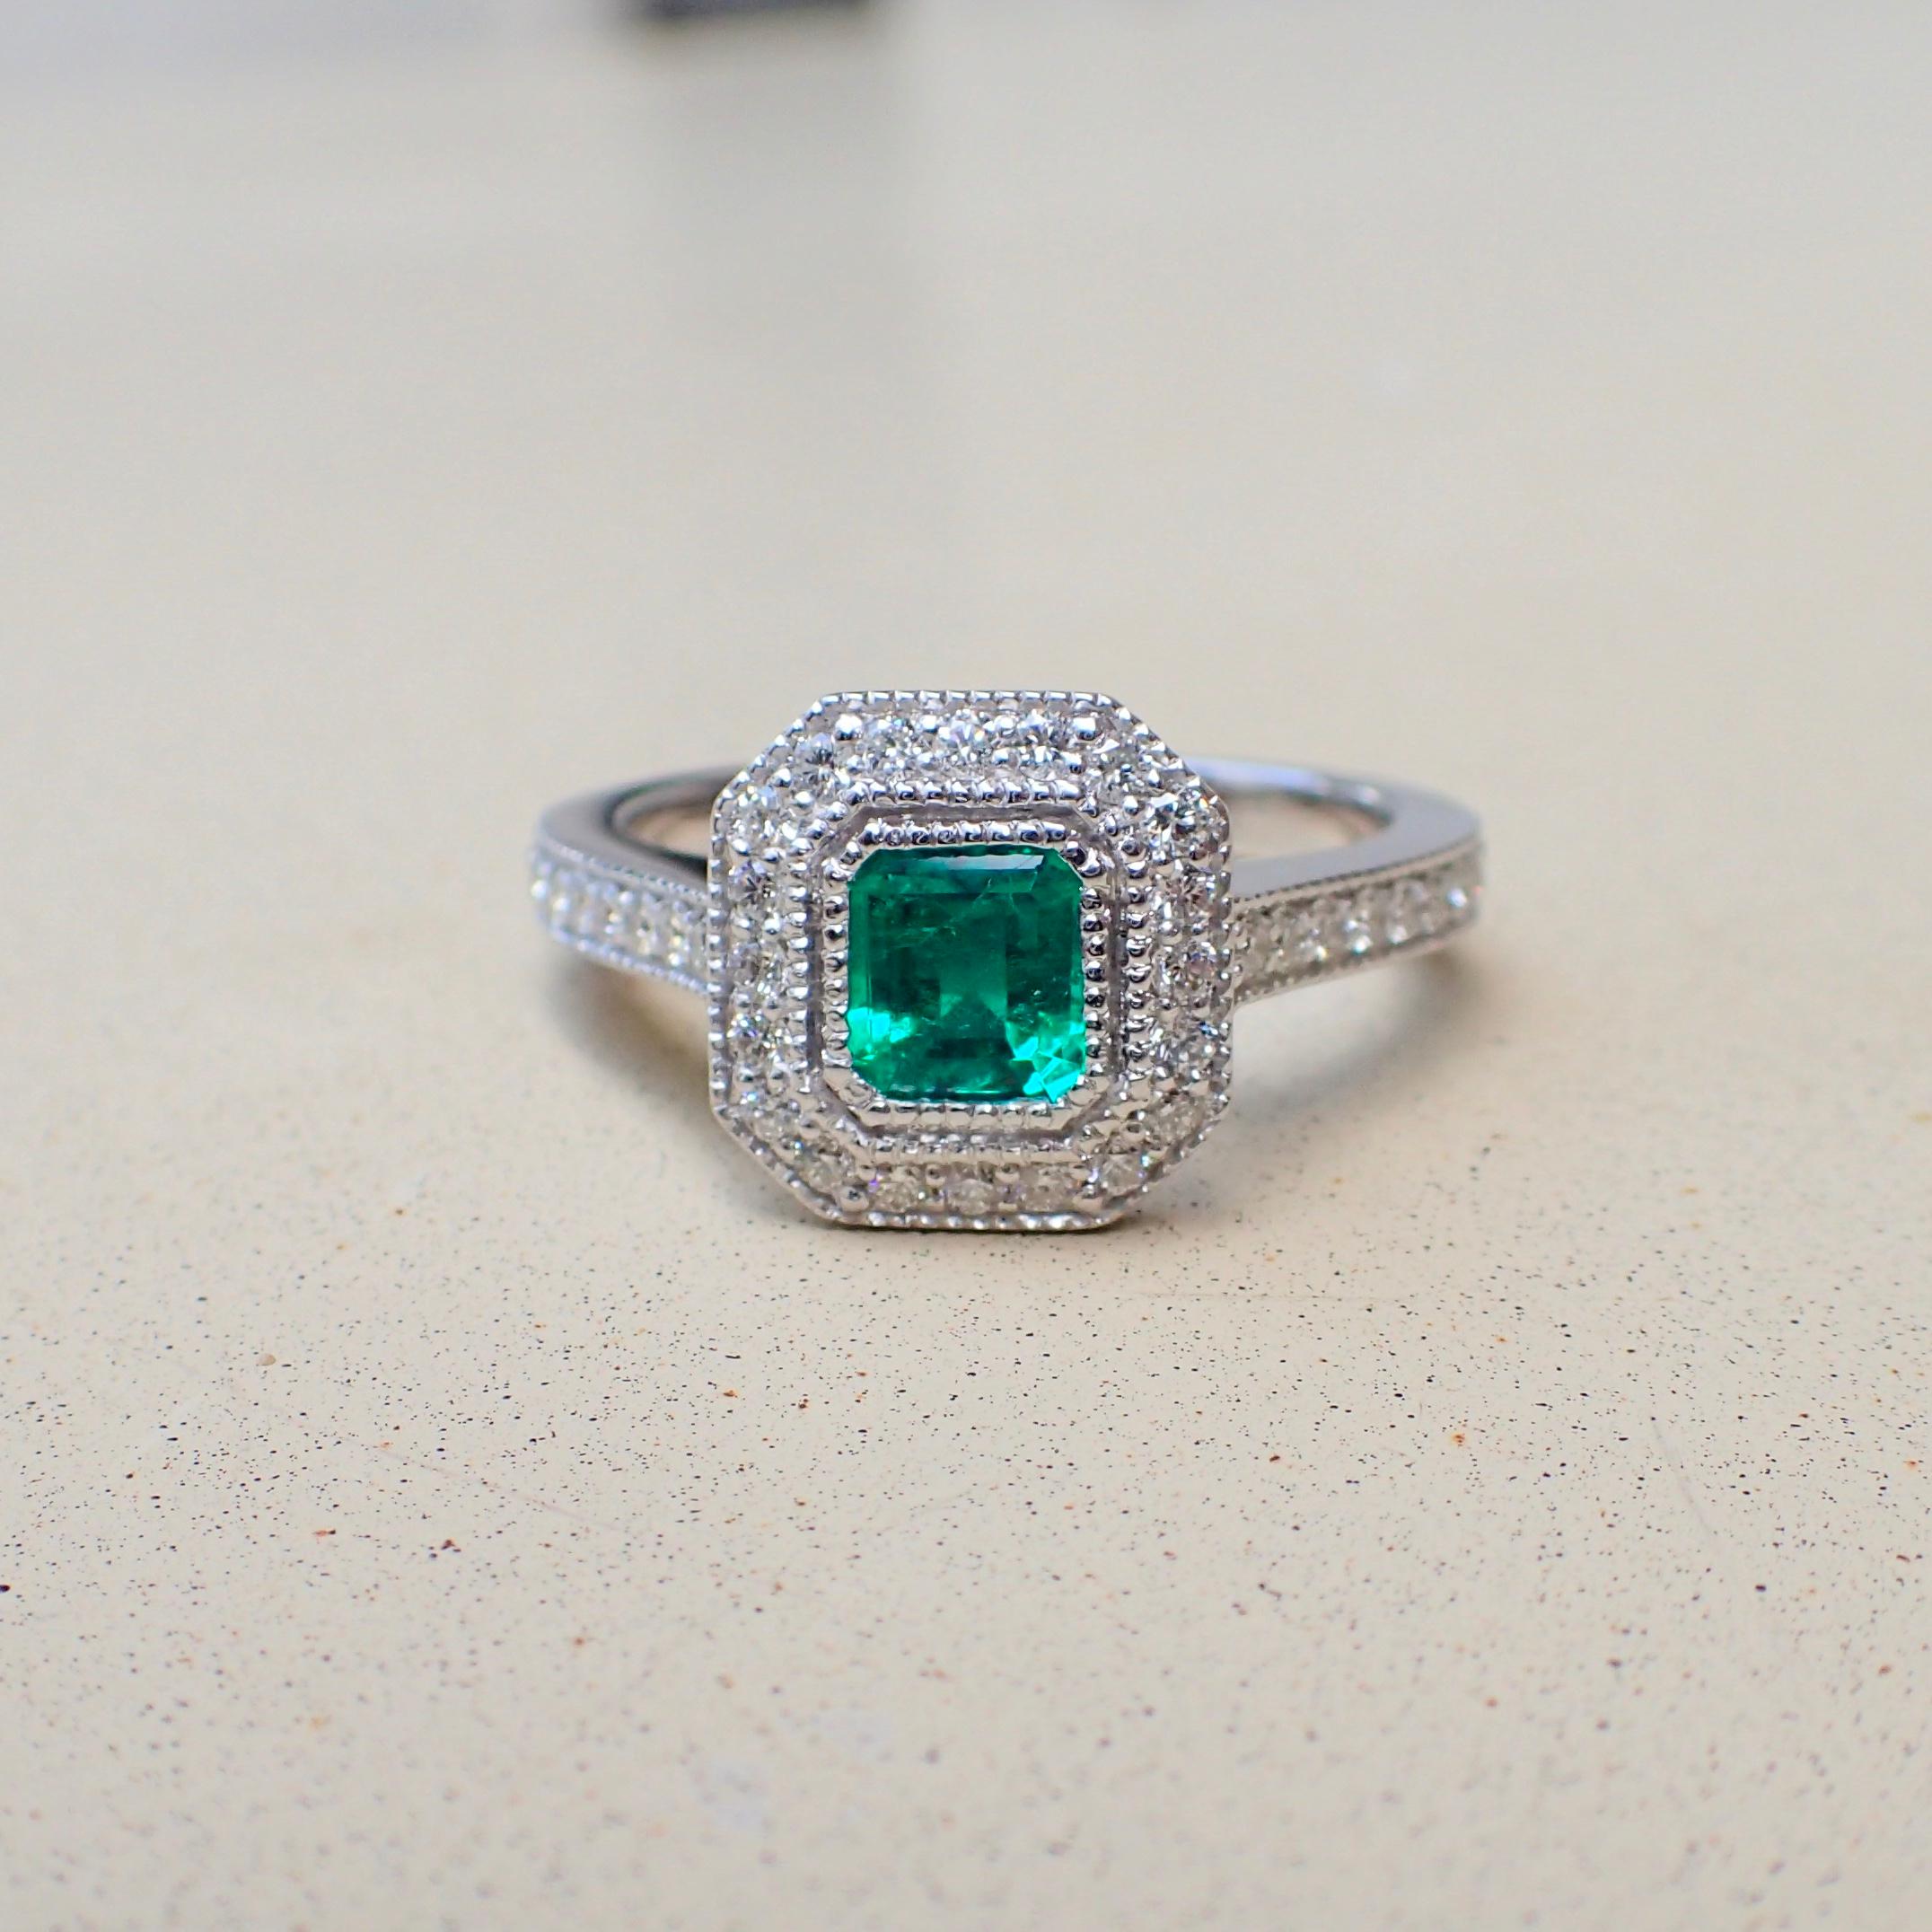 Emerald Cut 18 Karat White Gold Ring with a 0.518 Carat Emerald and 0.37 Carat of Diamond